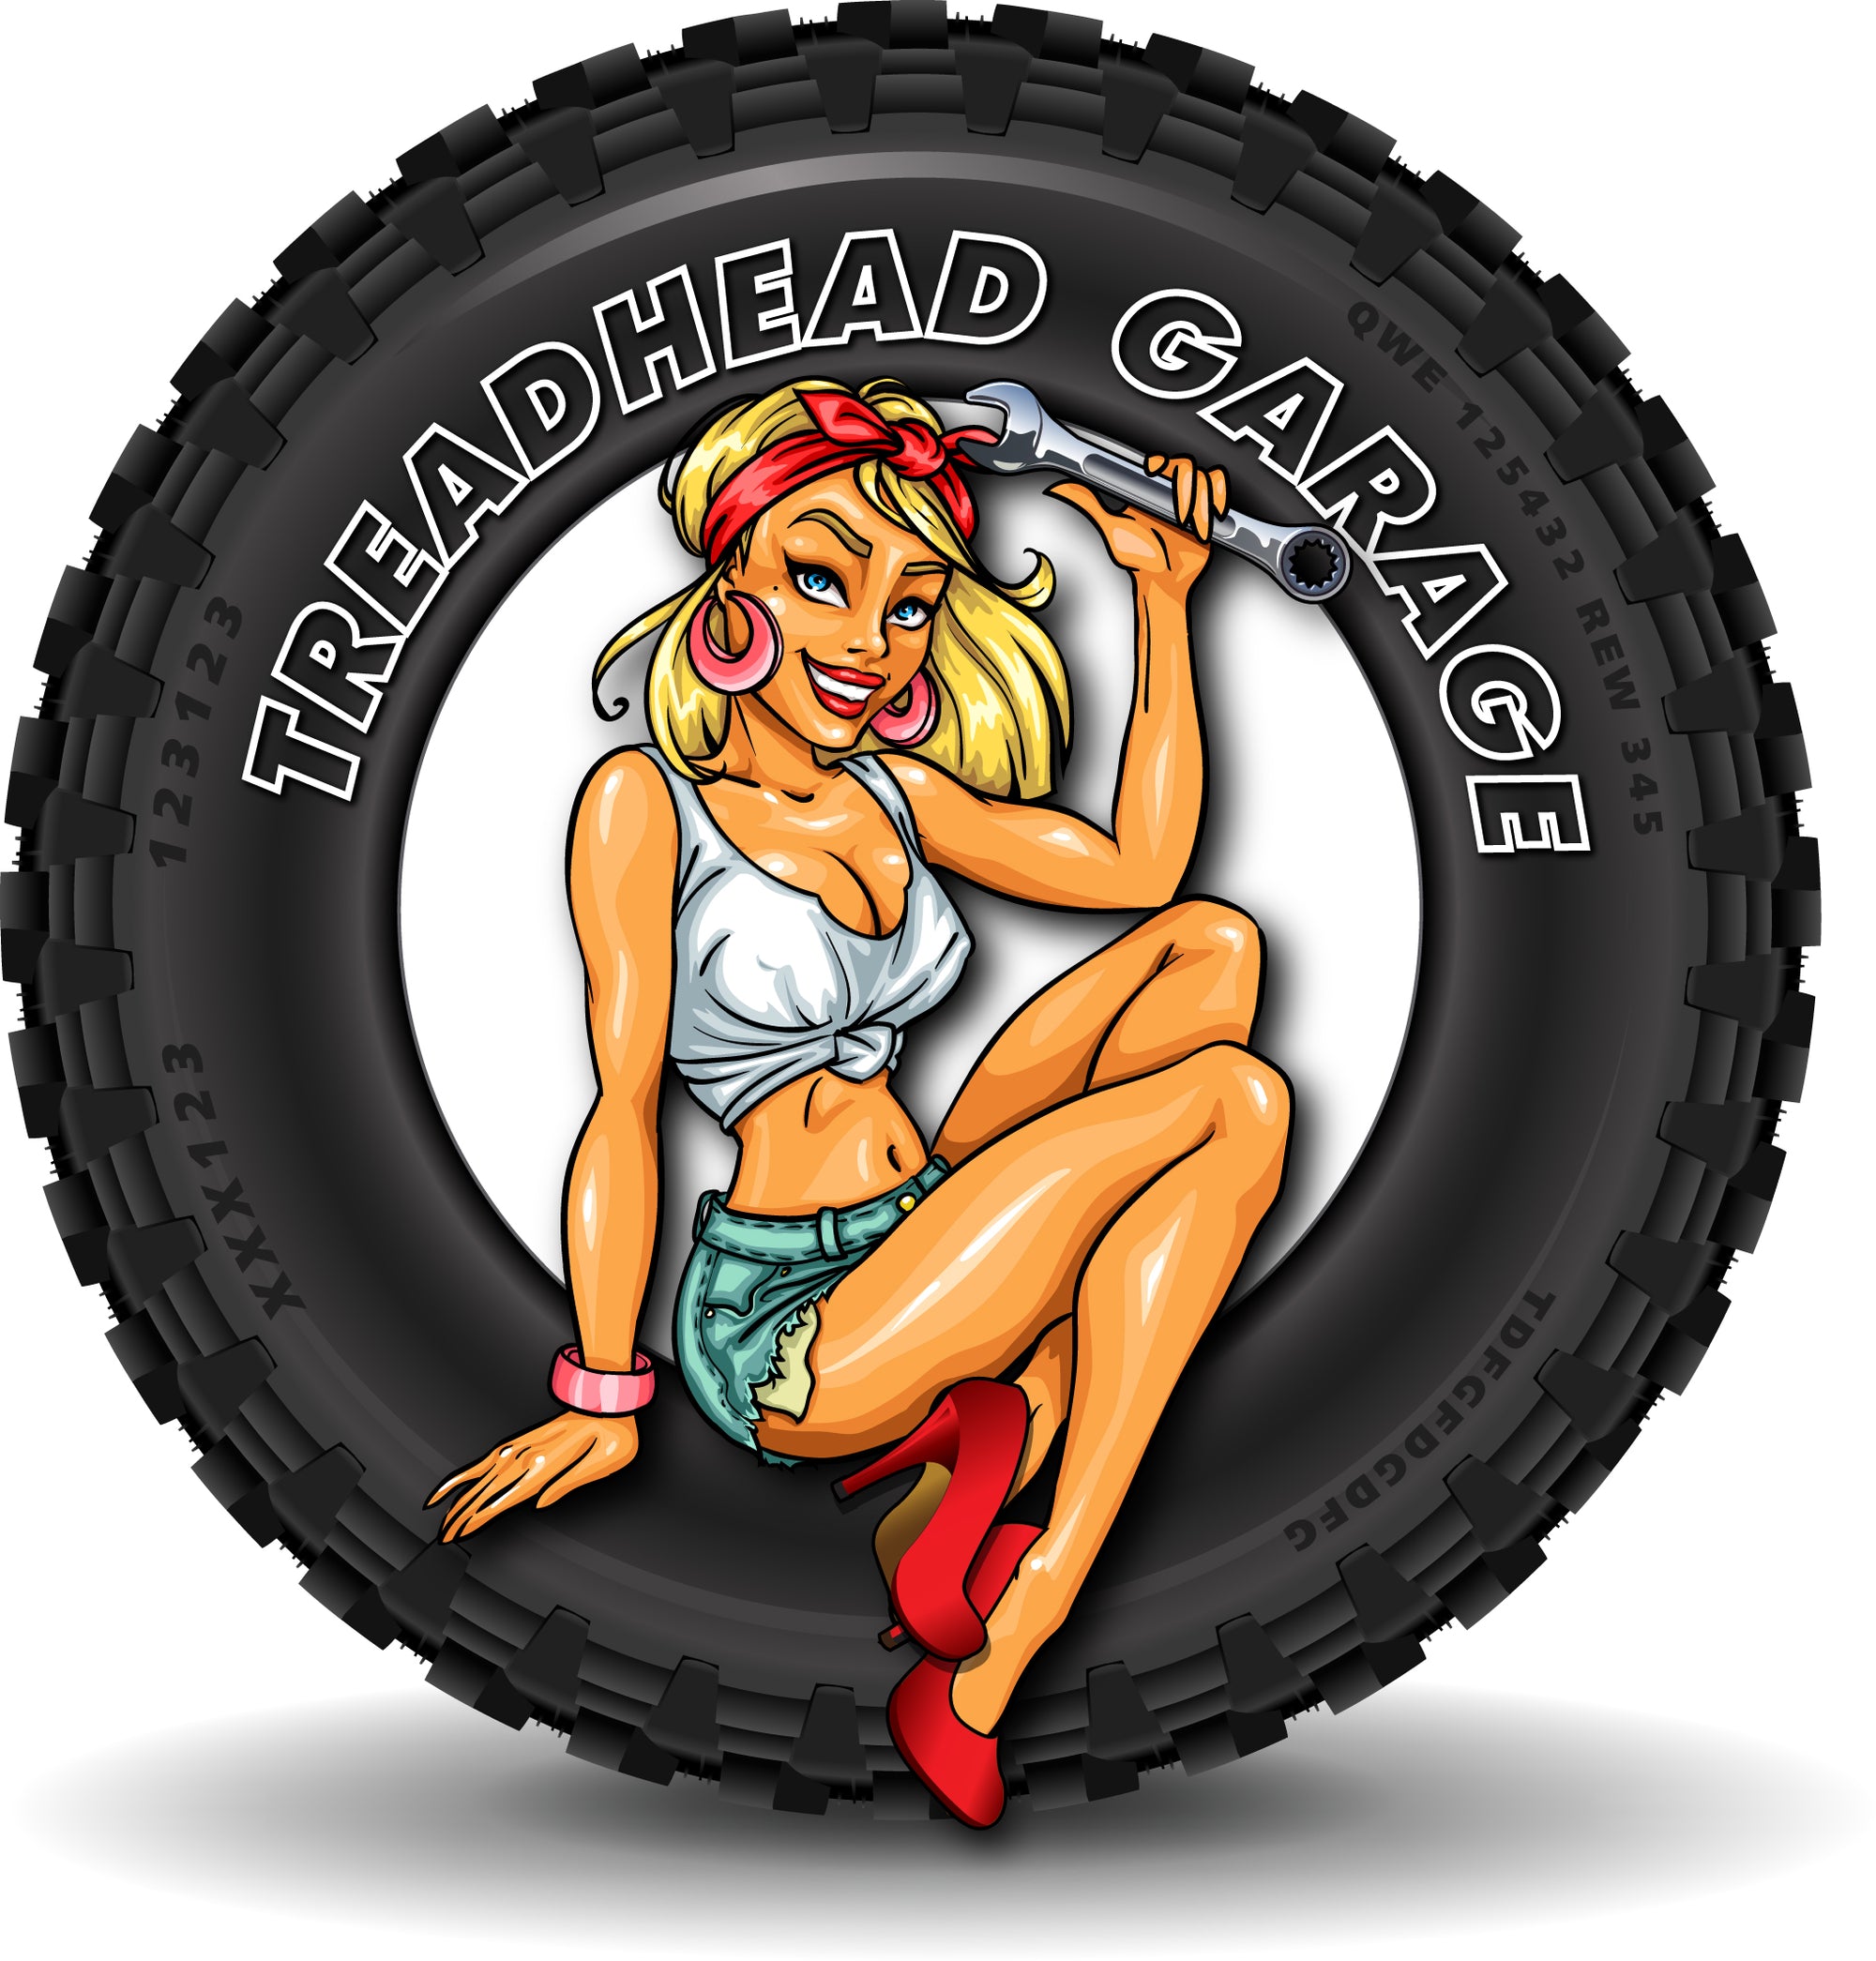 TreadHead Garage - We work hard.... So you can play harder